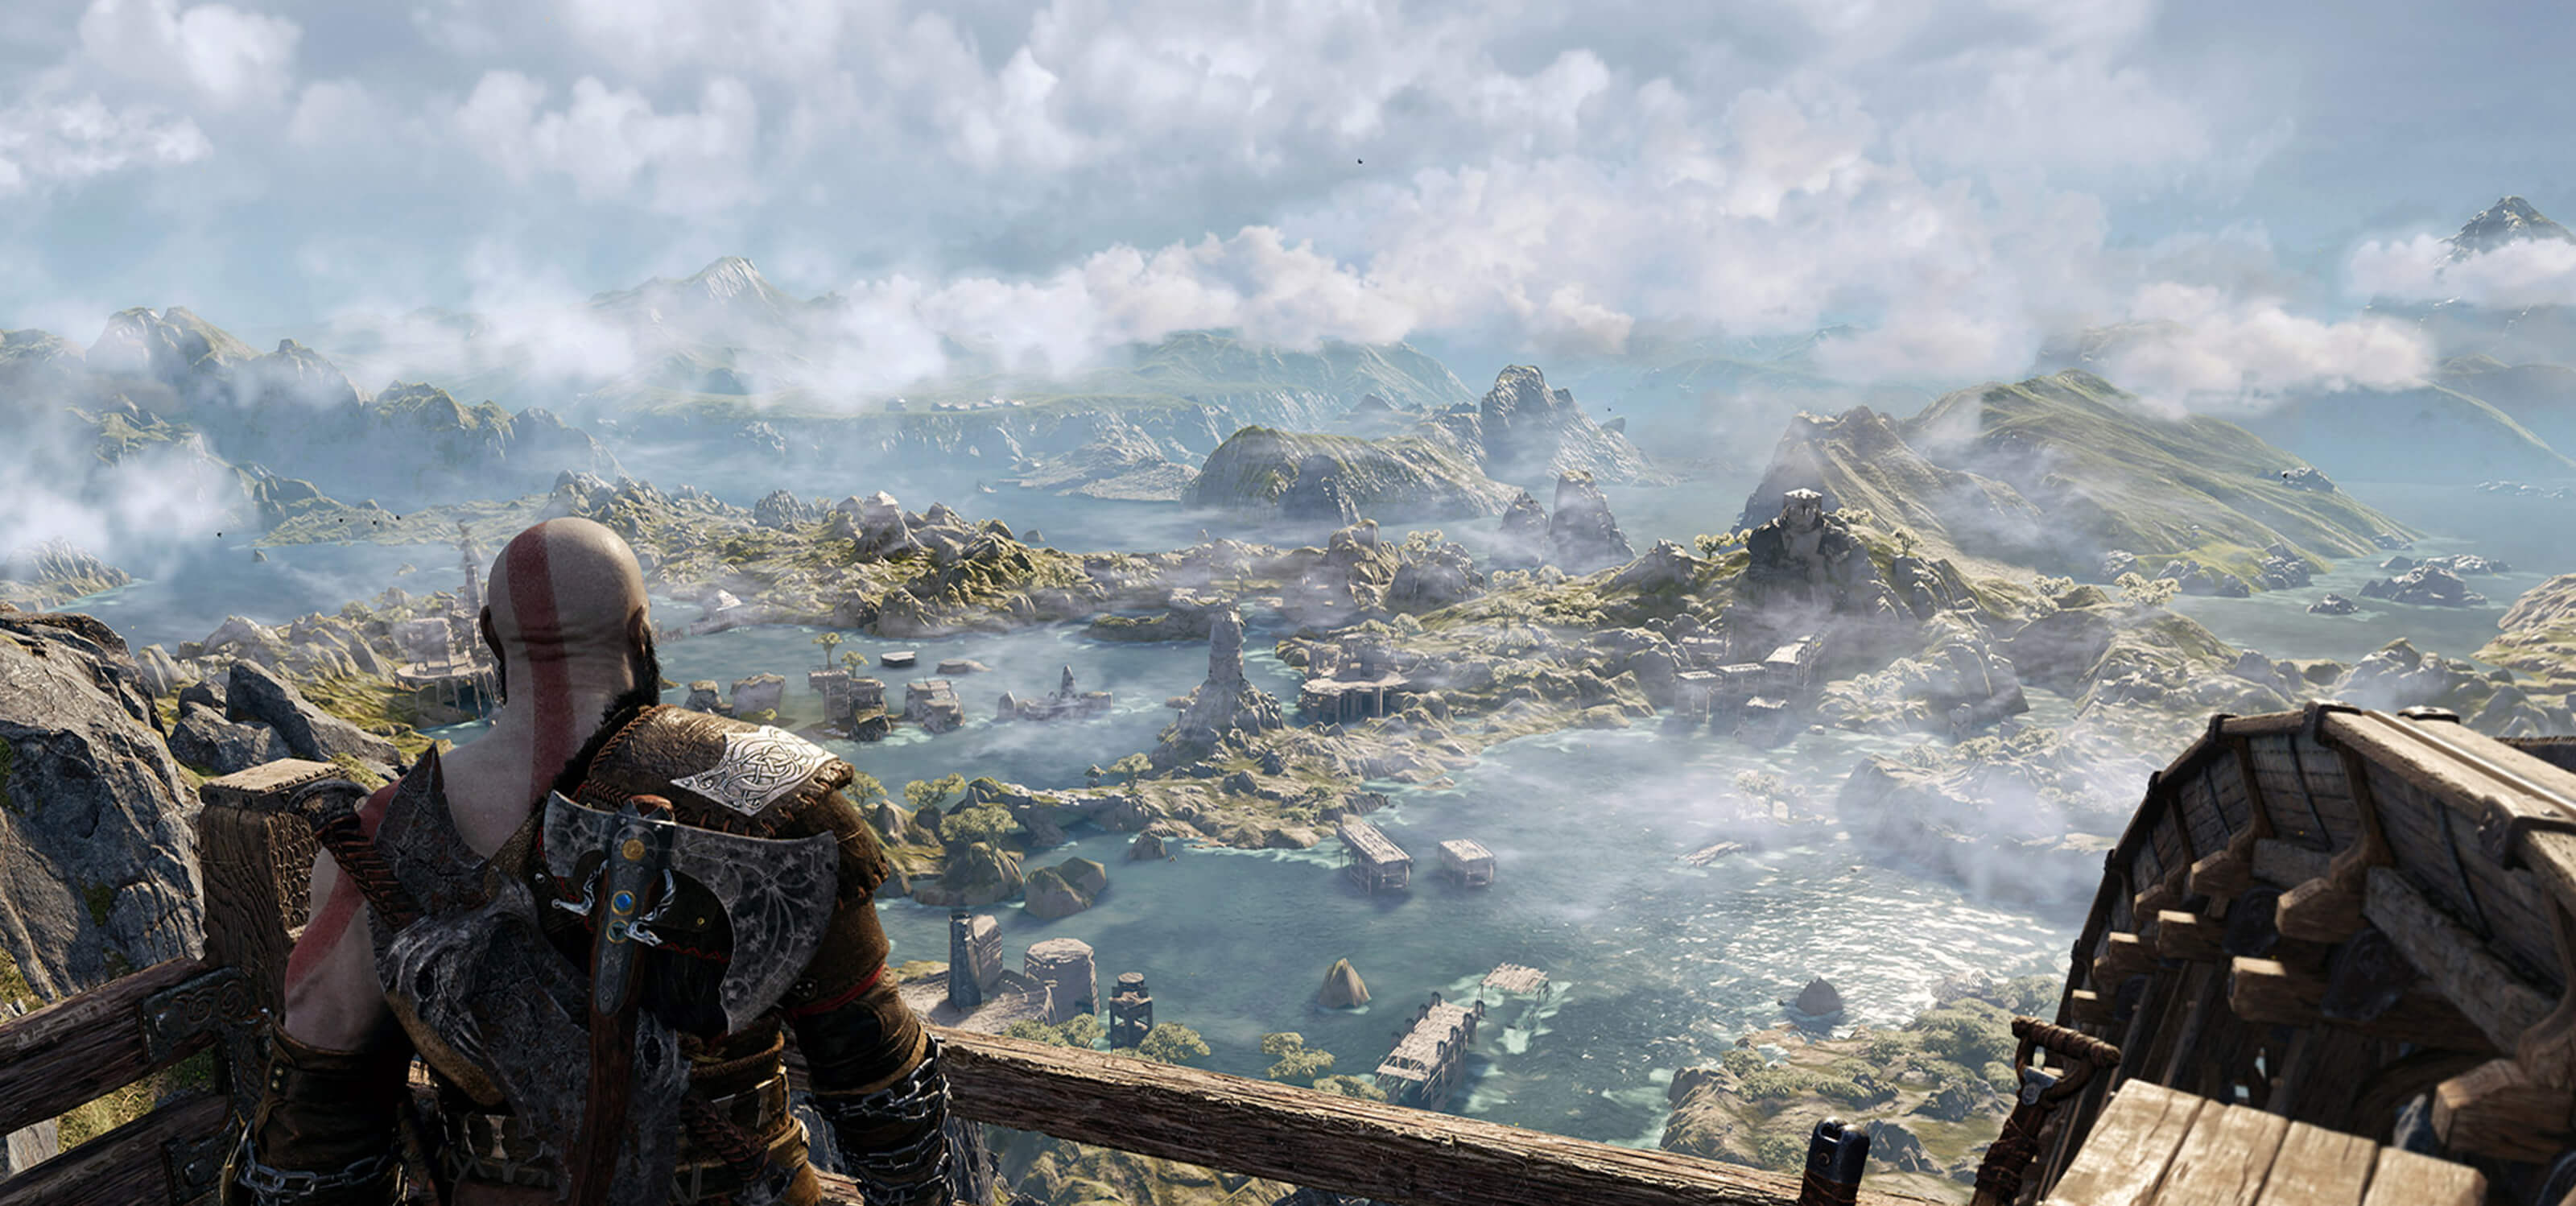 Kratos gazes out on a mountainous lake in God of War Ragnarok.